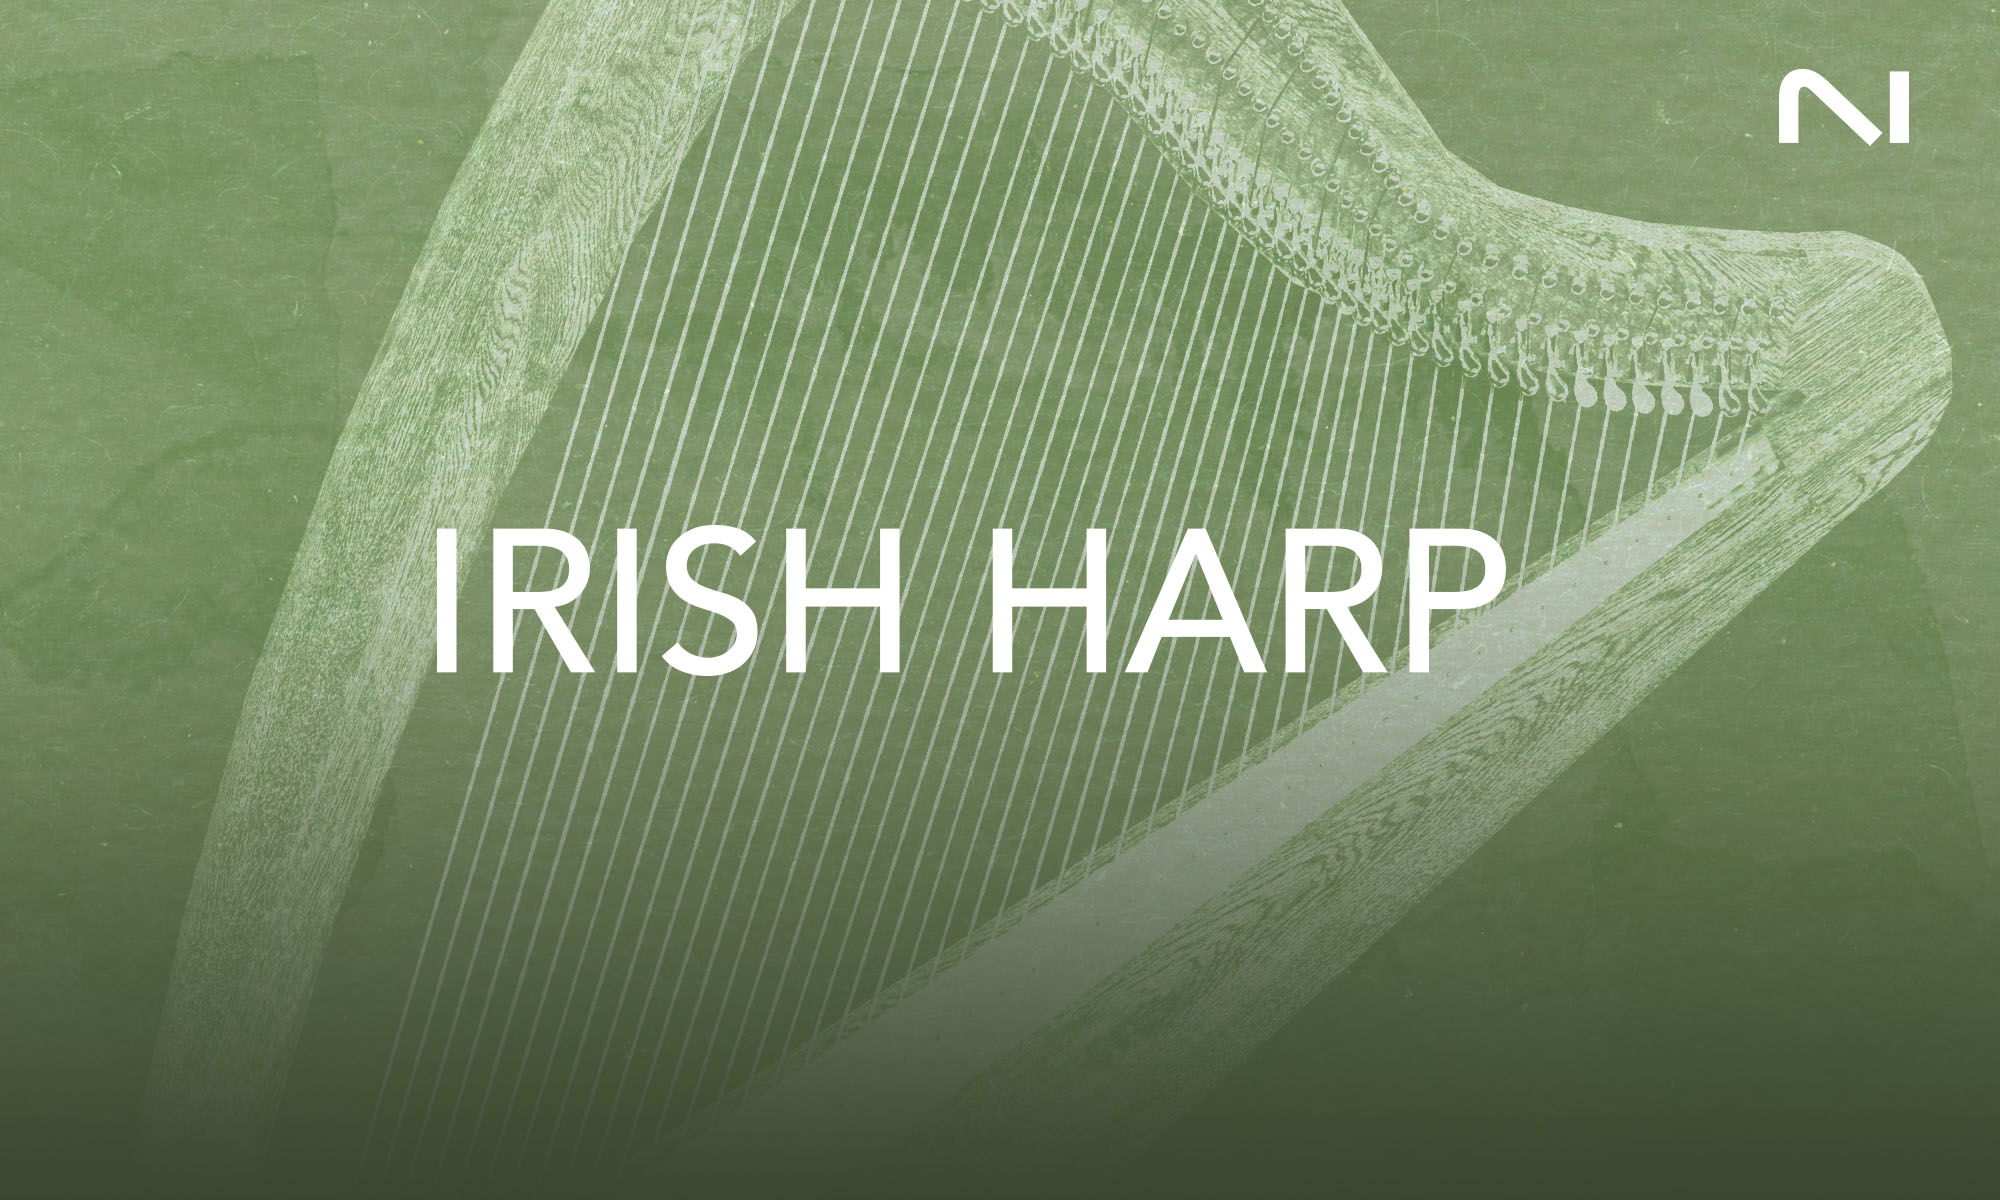 Irish-Harp-manual-coverIrish-Harp-manual-cover2000x1200px.jpg